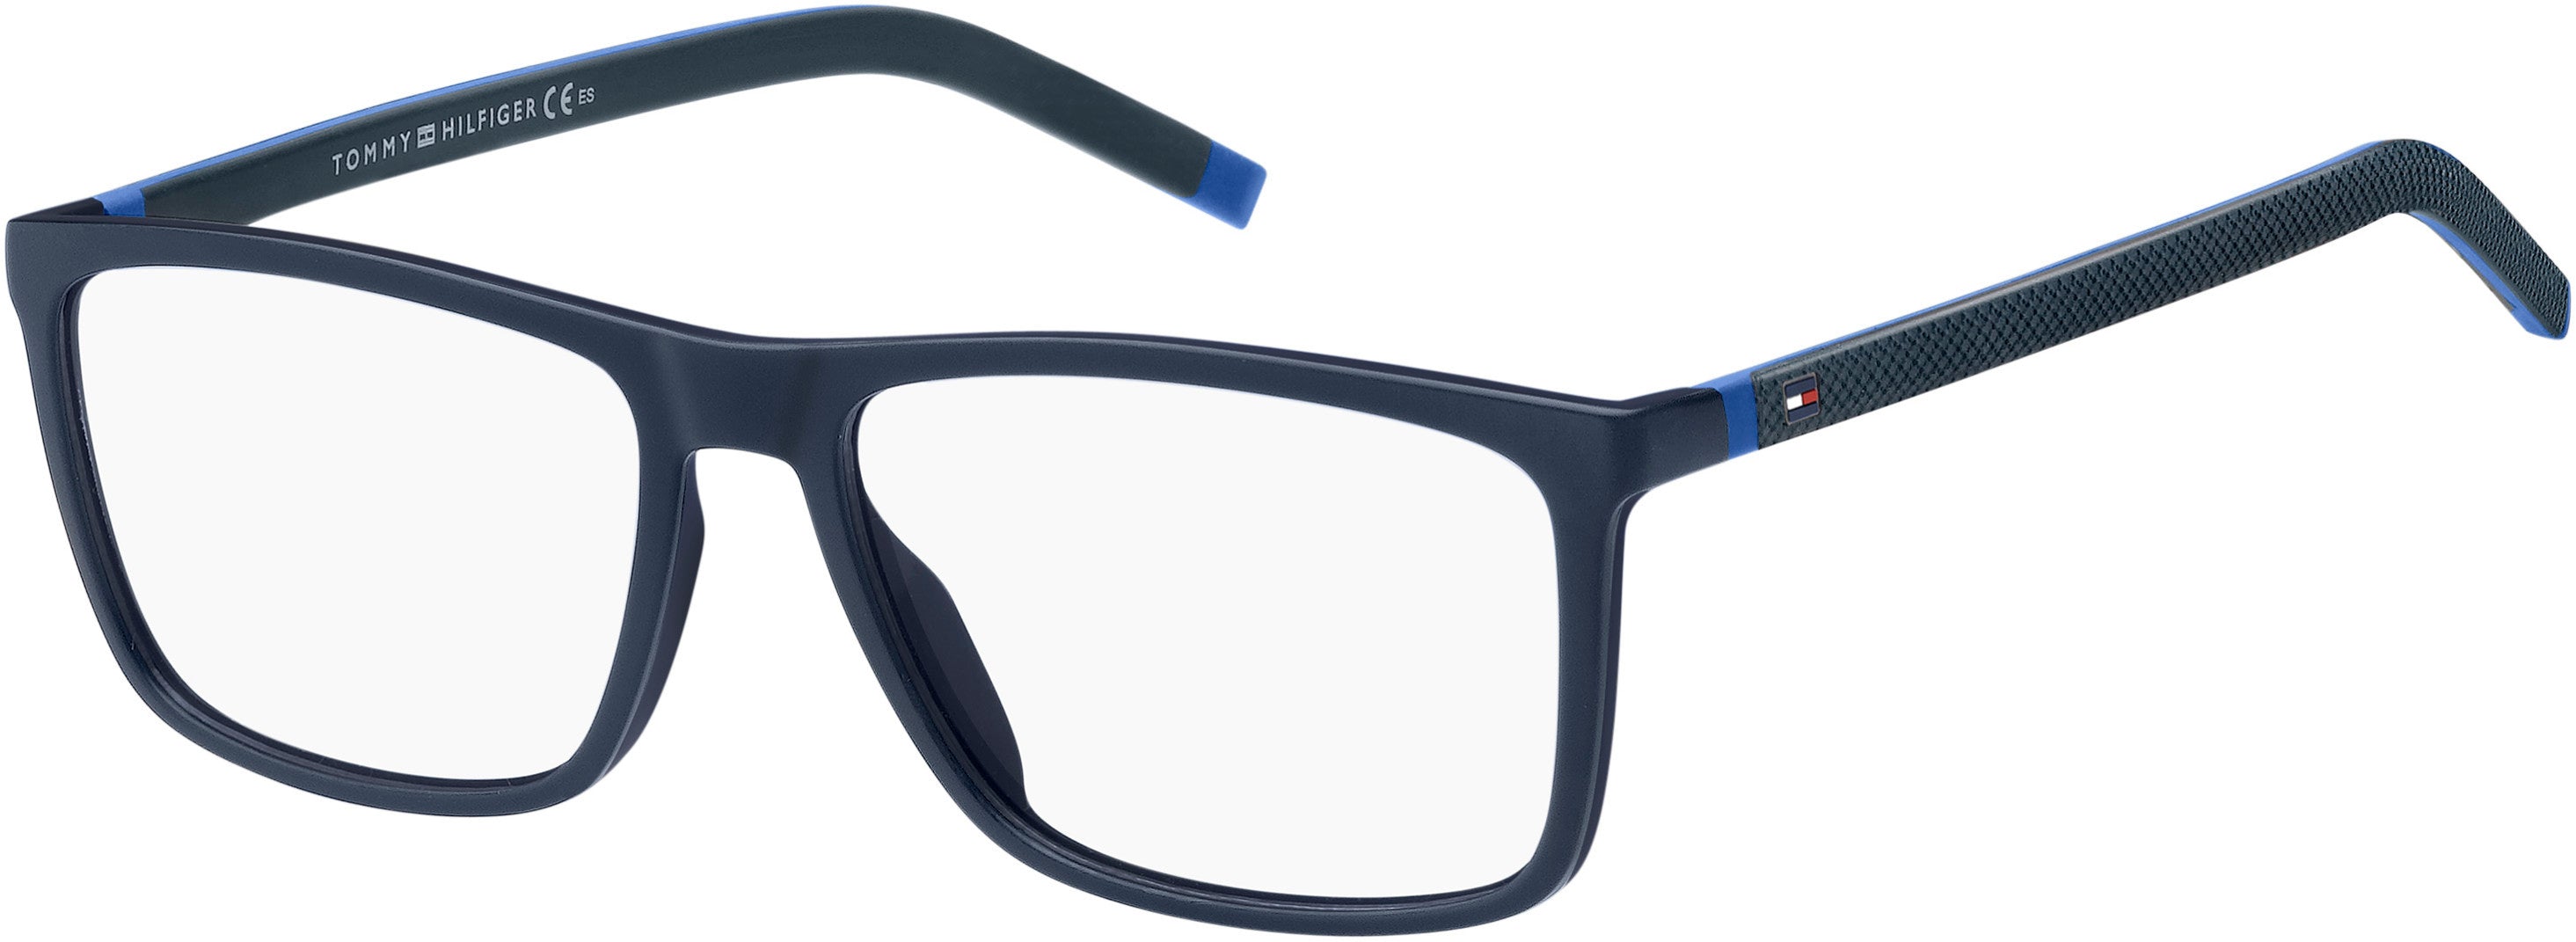 Tommy Hilfiger T. Hilfiger 1742 Rectangular Eyeglasses 0IPQ-0IPQ  Matte Bl Blue (00 Demo Lens)